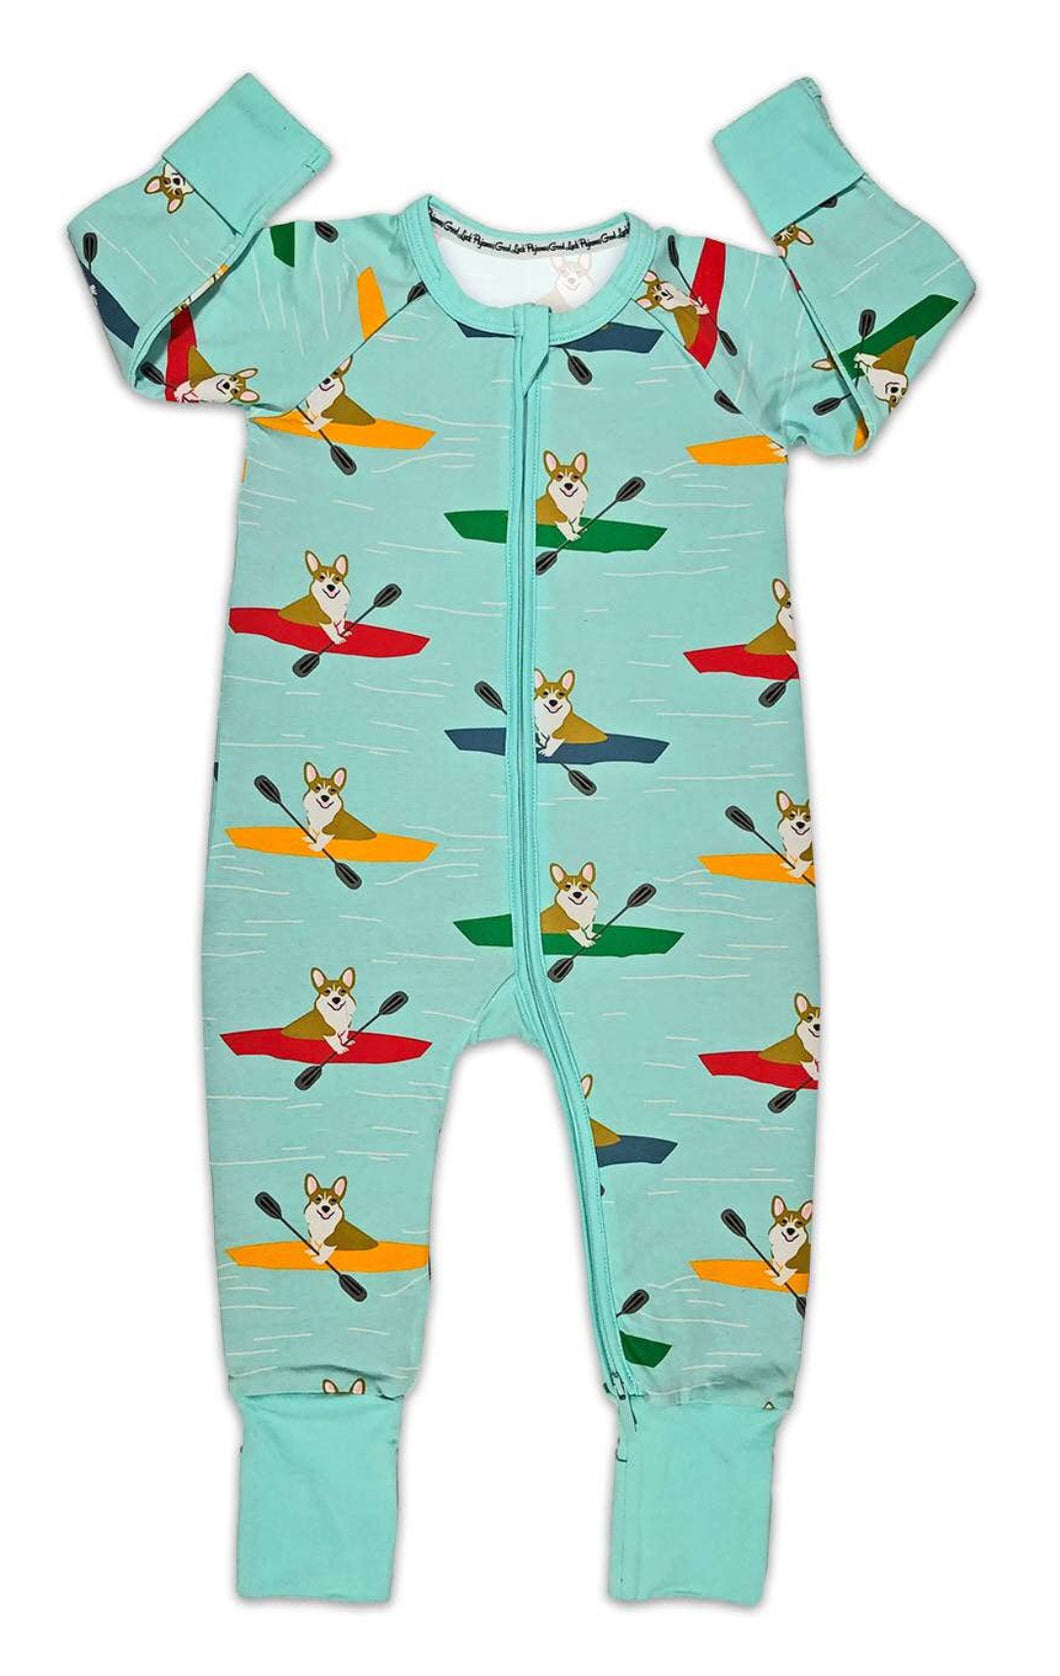 Corgi’s Kayaking Baby Pajamas